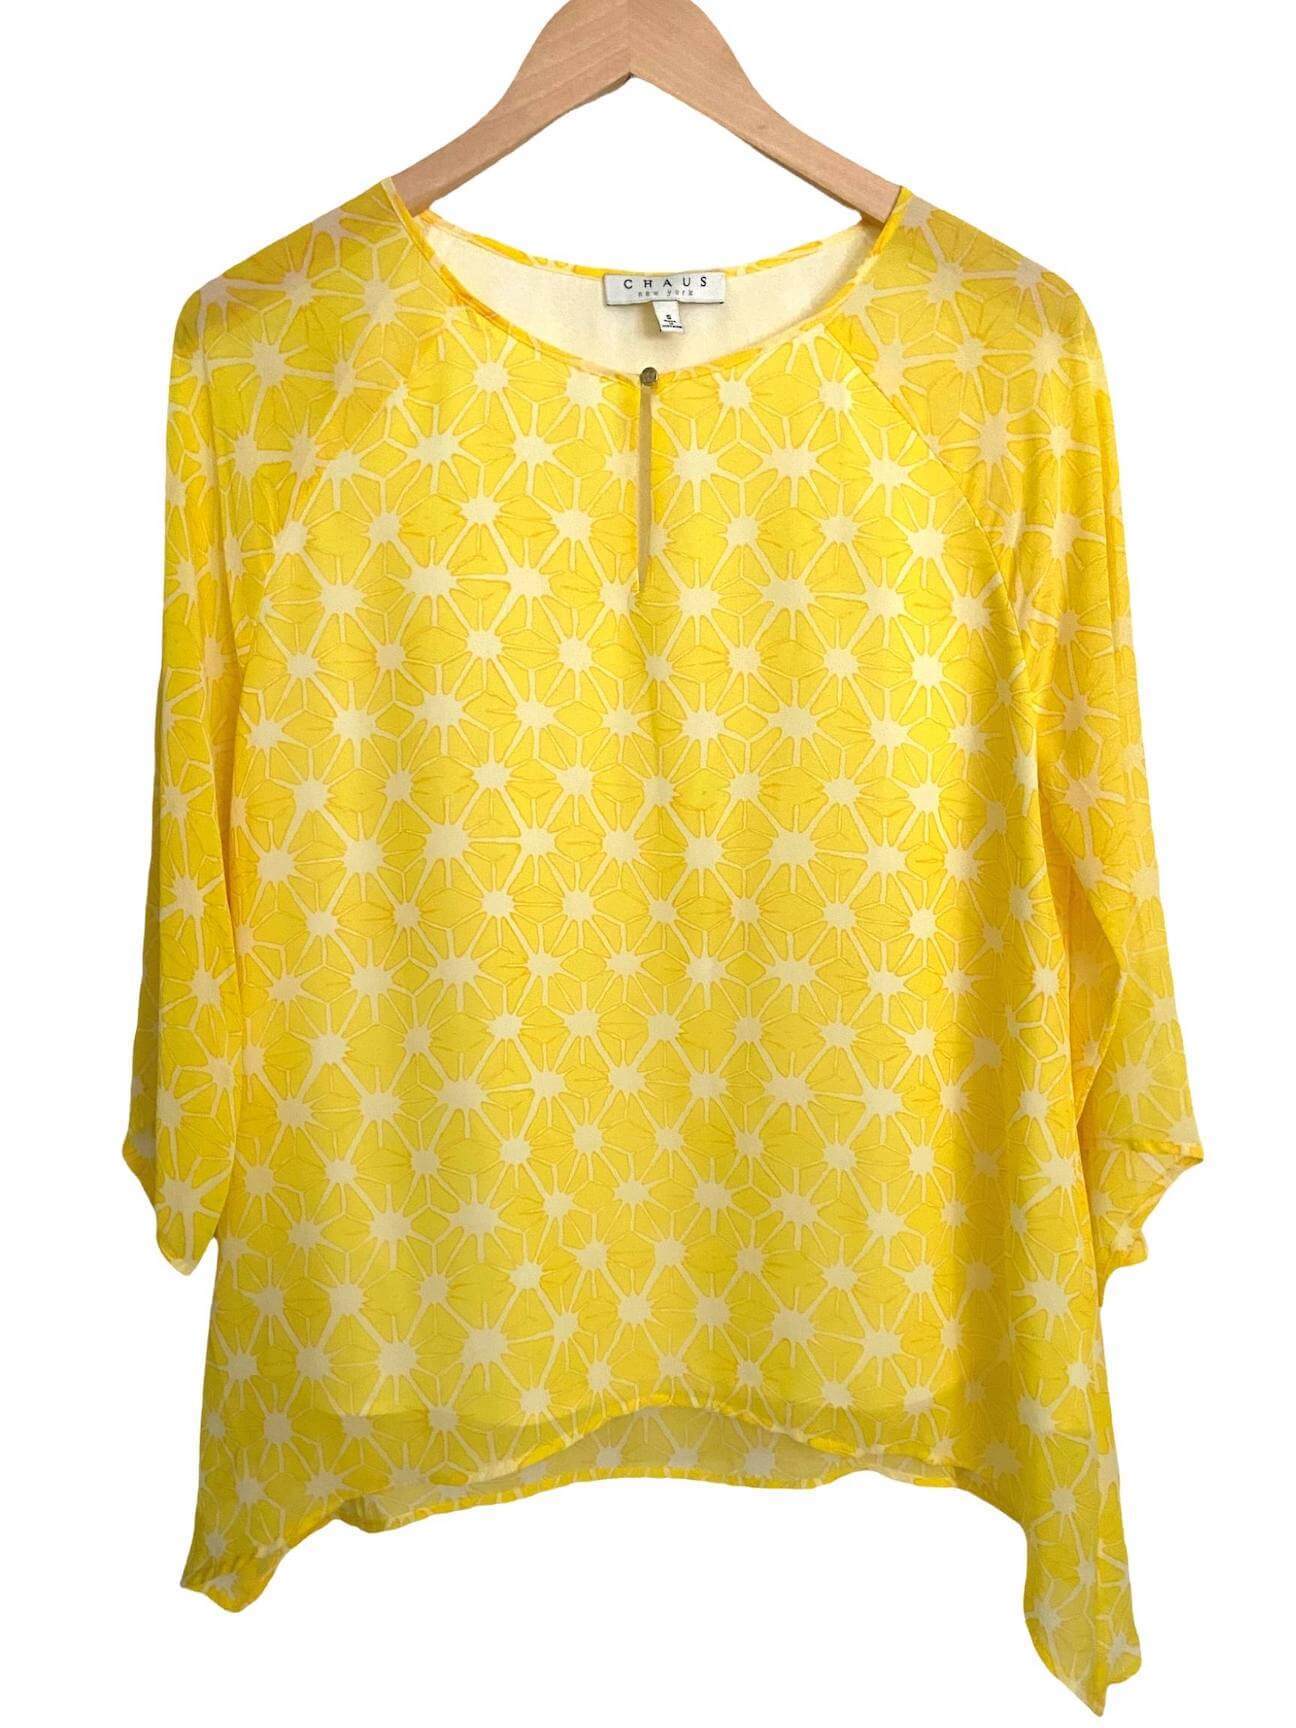 Bright Winter CHAUS yellow starburst print blouse